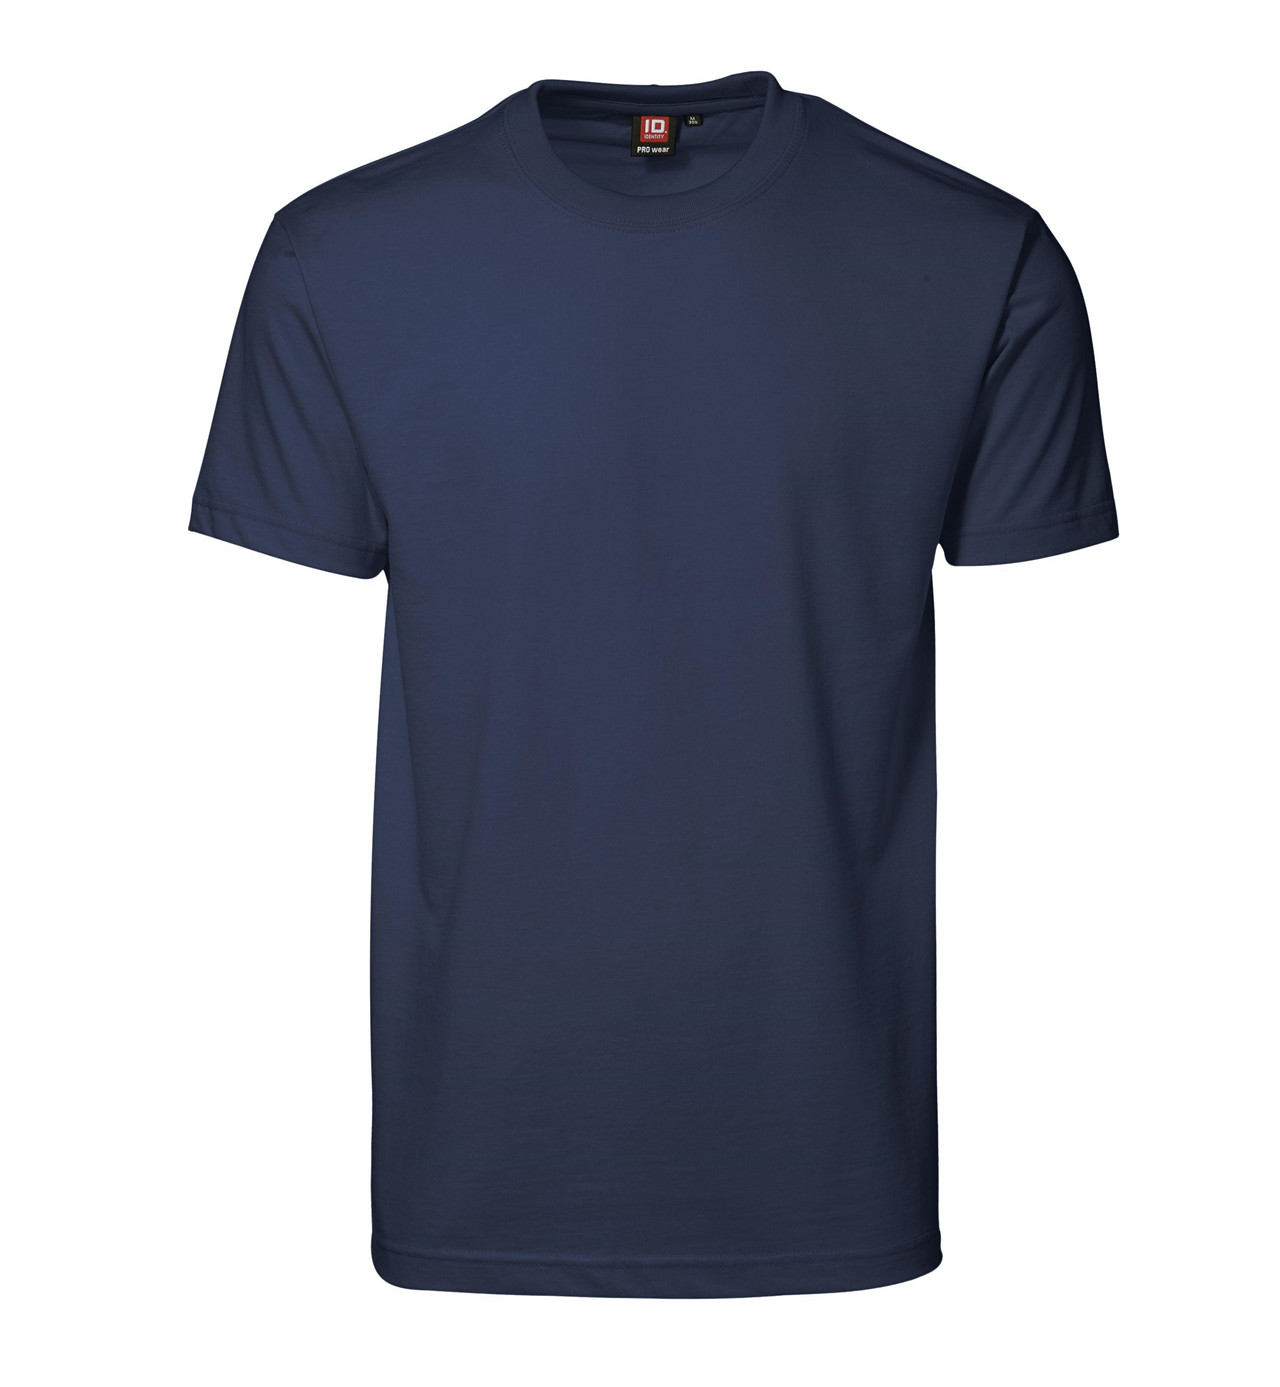 ID PRO Wear T-shirt til Herre (Navy, 2XL)